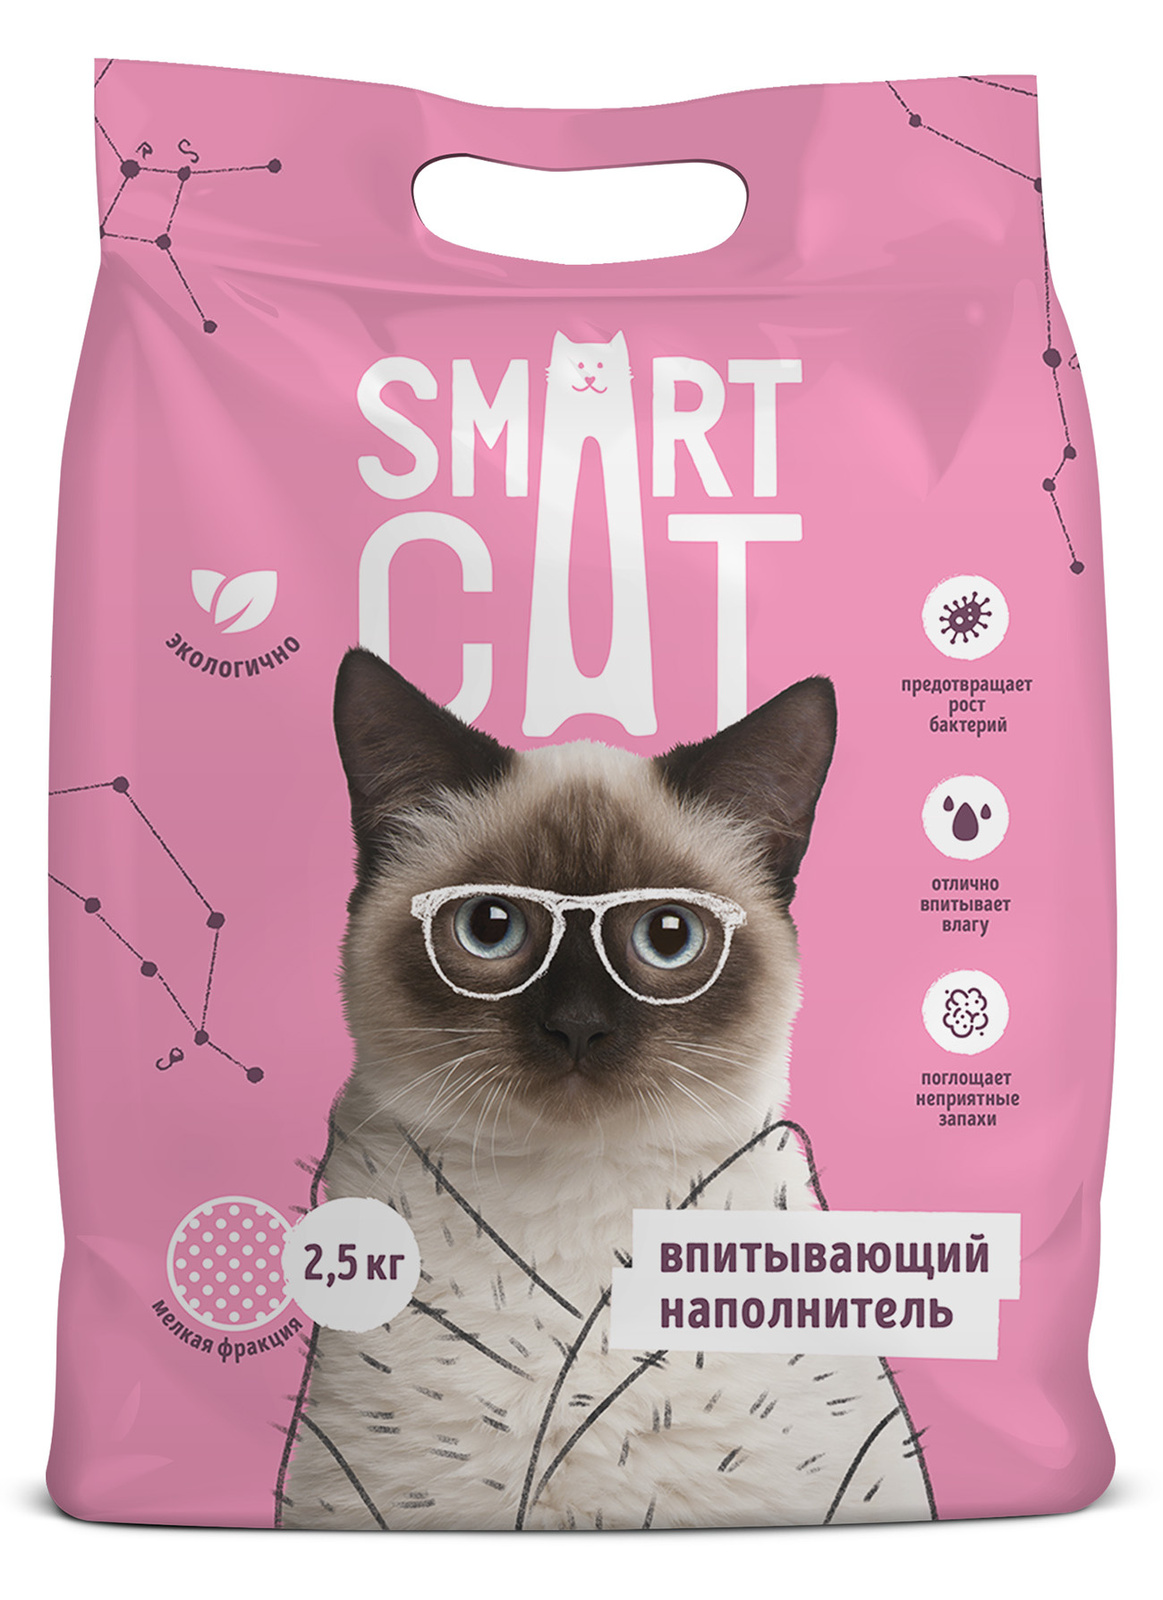 Smart Cat наполнитель Smart Cat наполнитель впитывающий наполнитель, мелкая фракция (5 кг) smart cat впитывающий наполнитель 10л 5 кг мелкая фракция 2шт